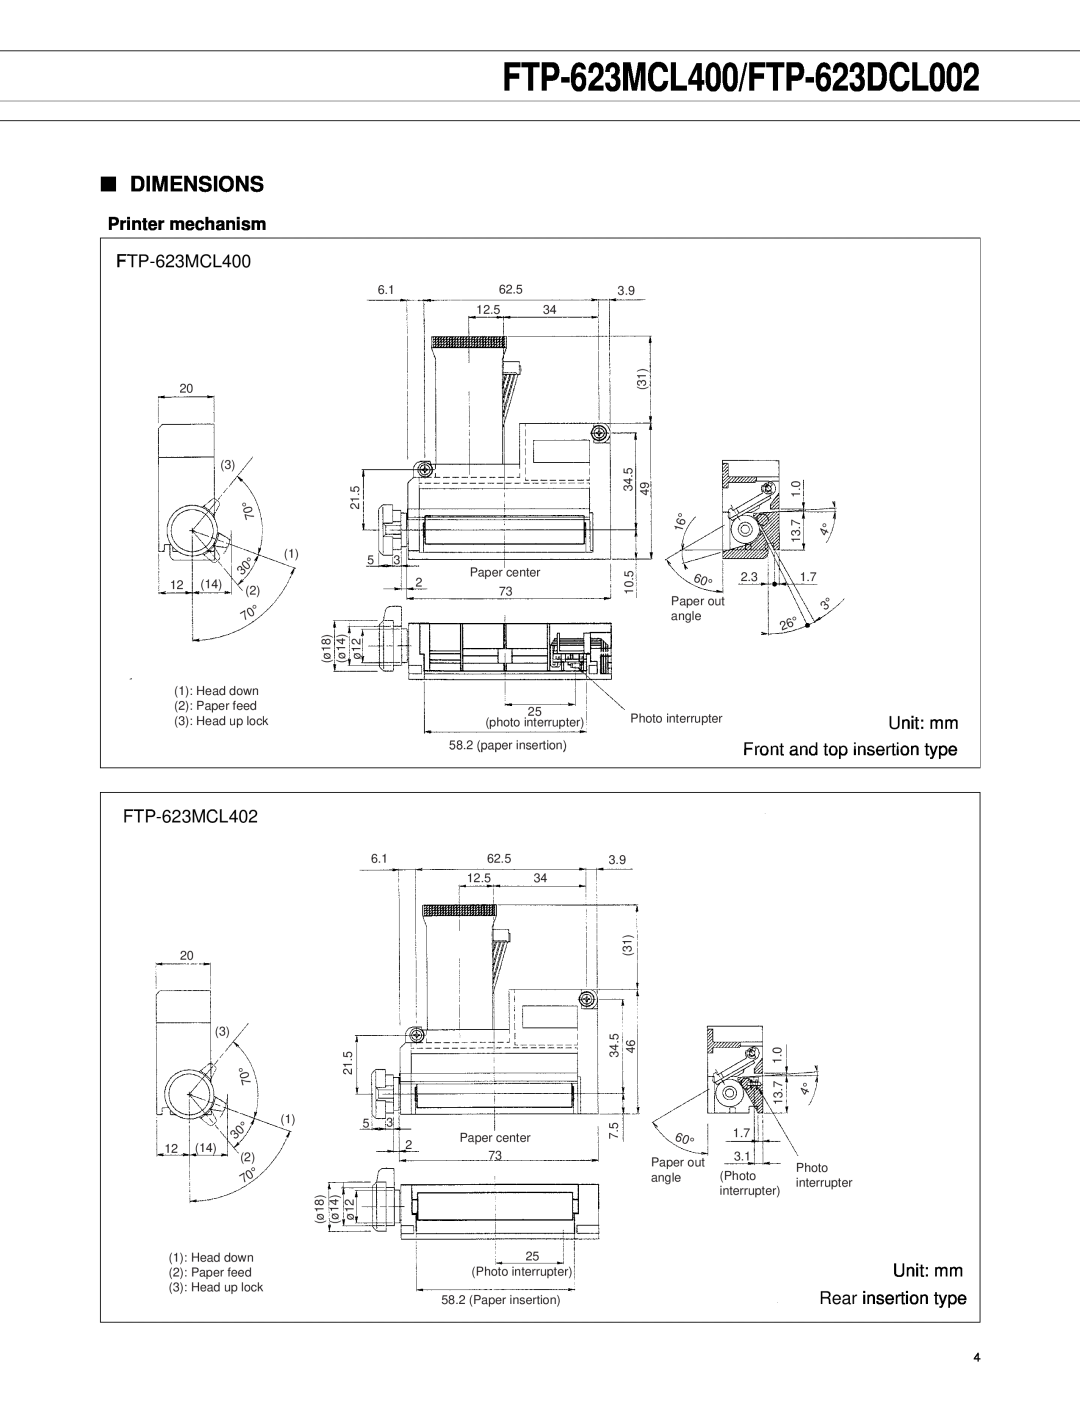 Fujitsu manual Dimensions, Printer mechanism, FTP-623MCL400/FTP-623DCL002 